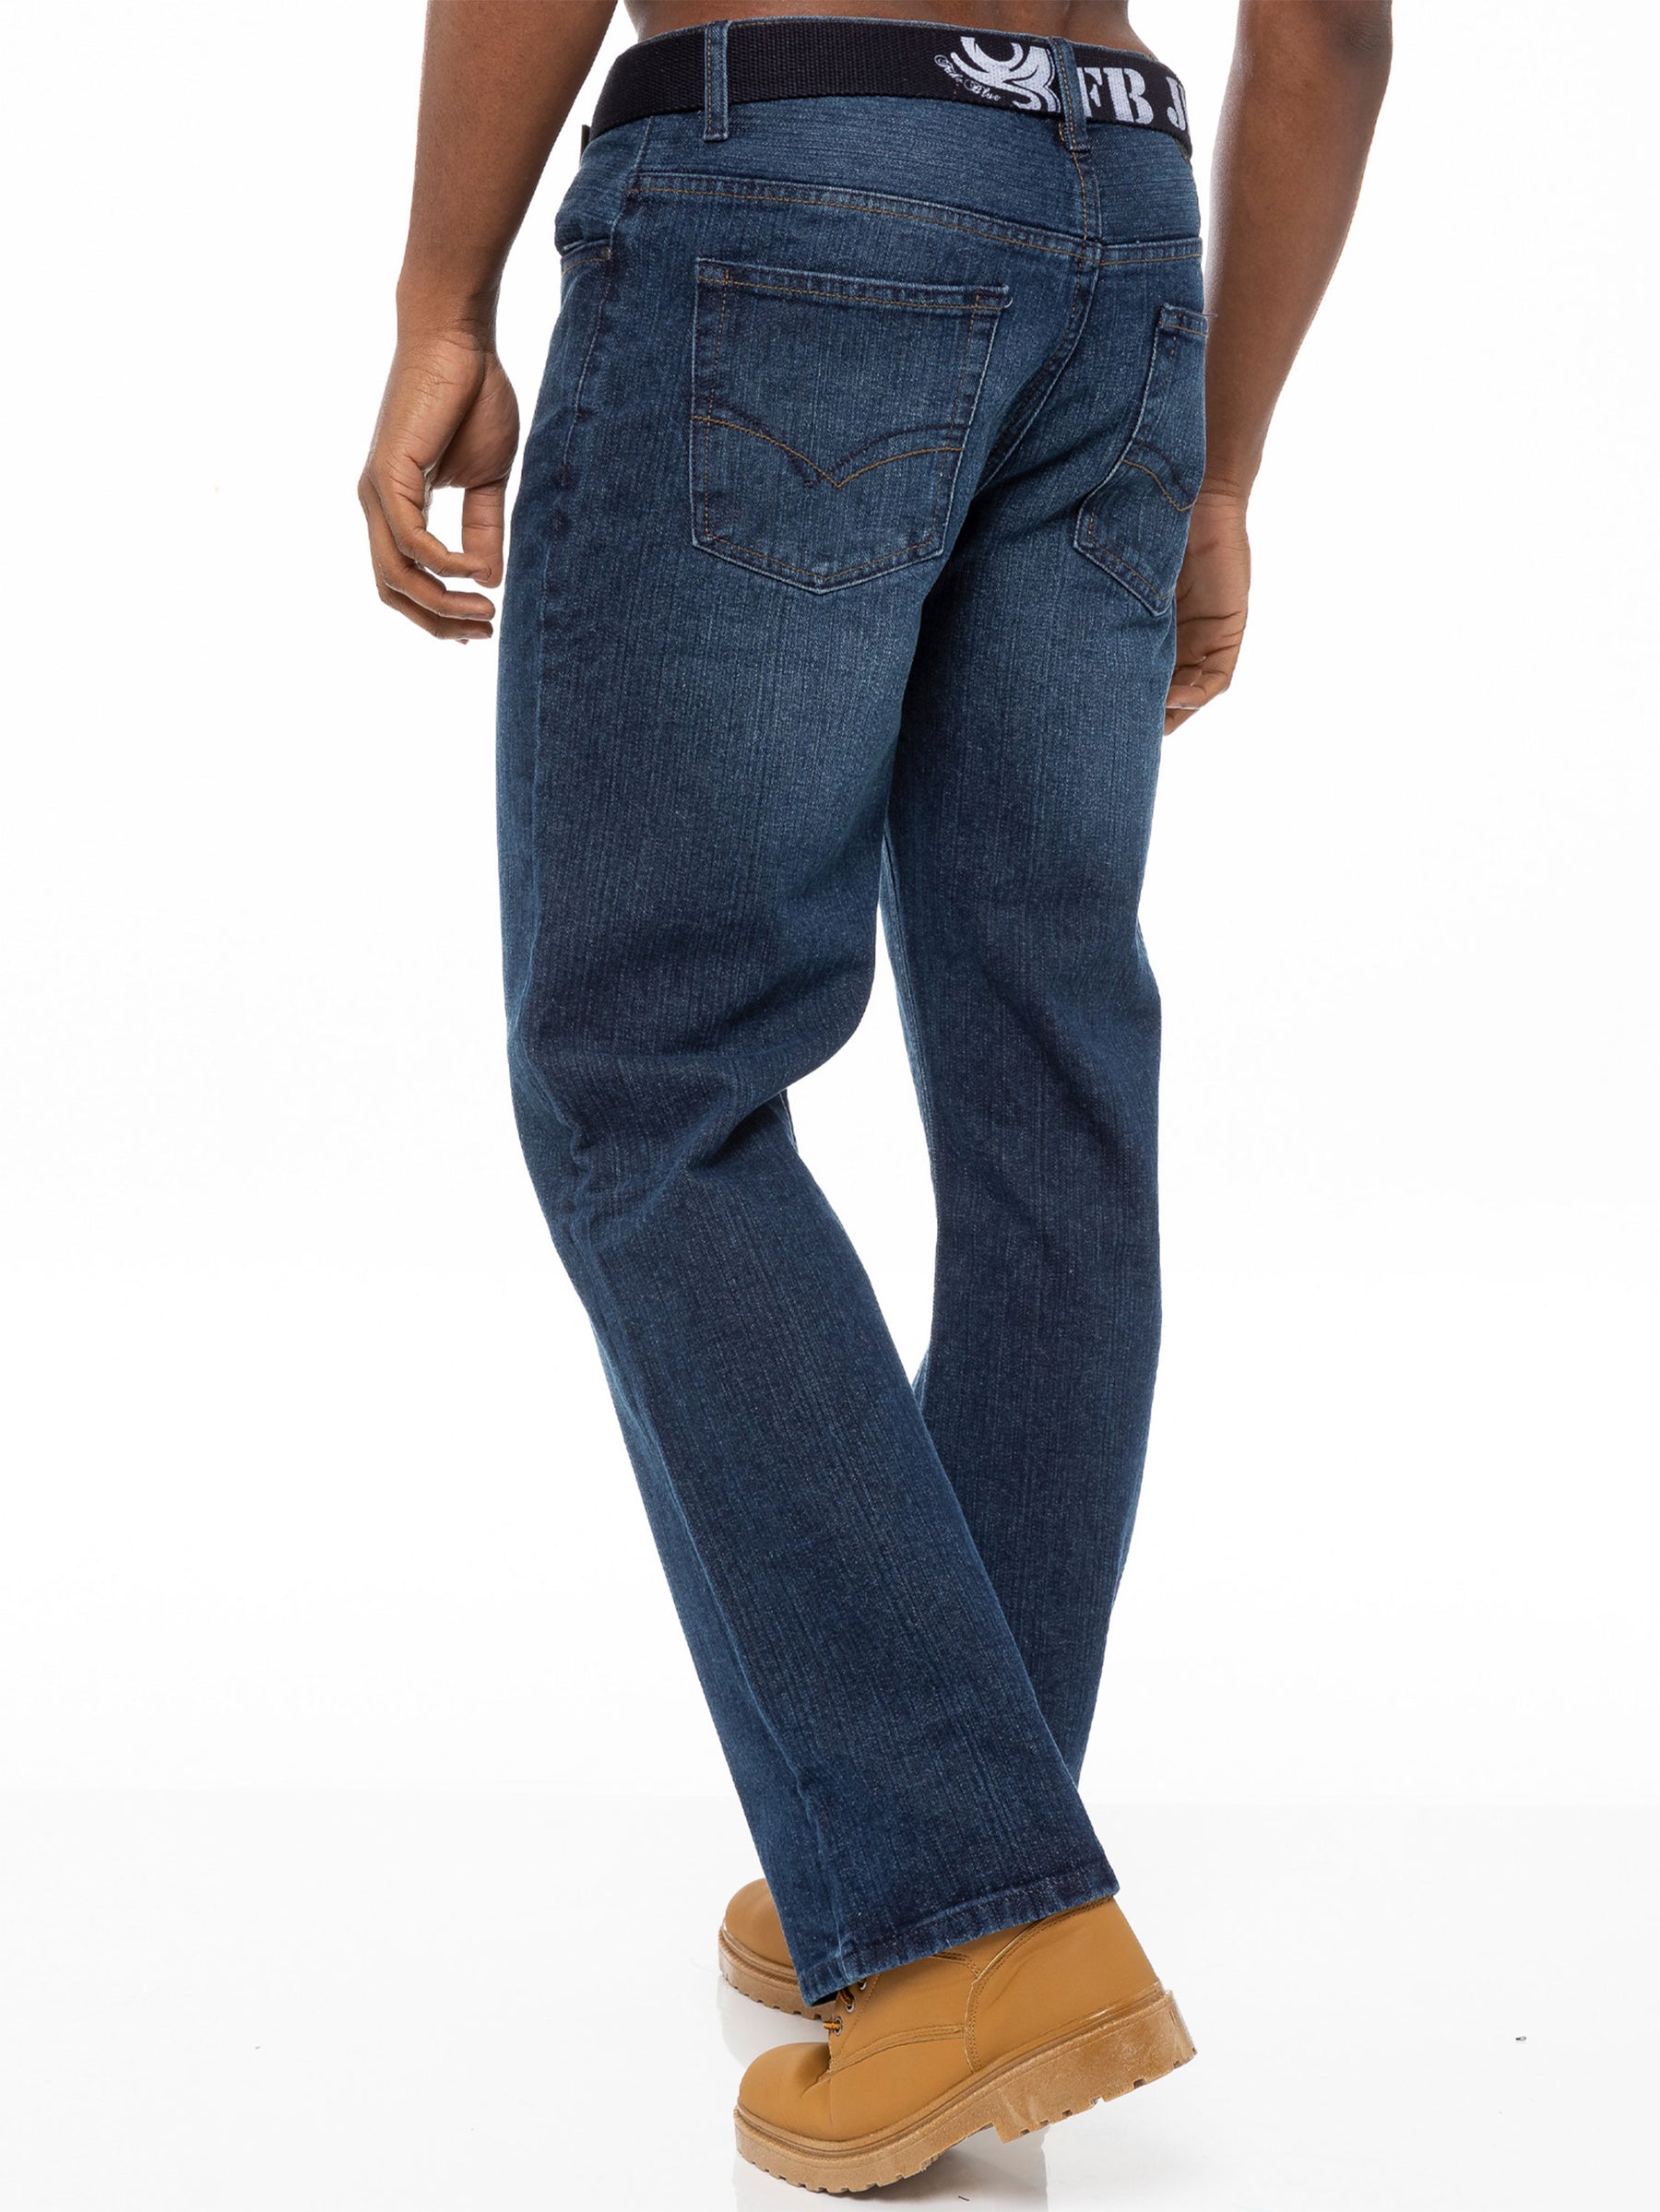 FBM19 - FBM20 Men's Blue Wash Boot Cut Denim Jeans | FBM Designer Menswear FBM RAWDENIM